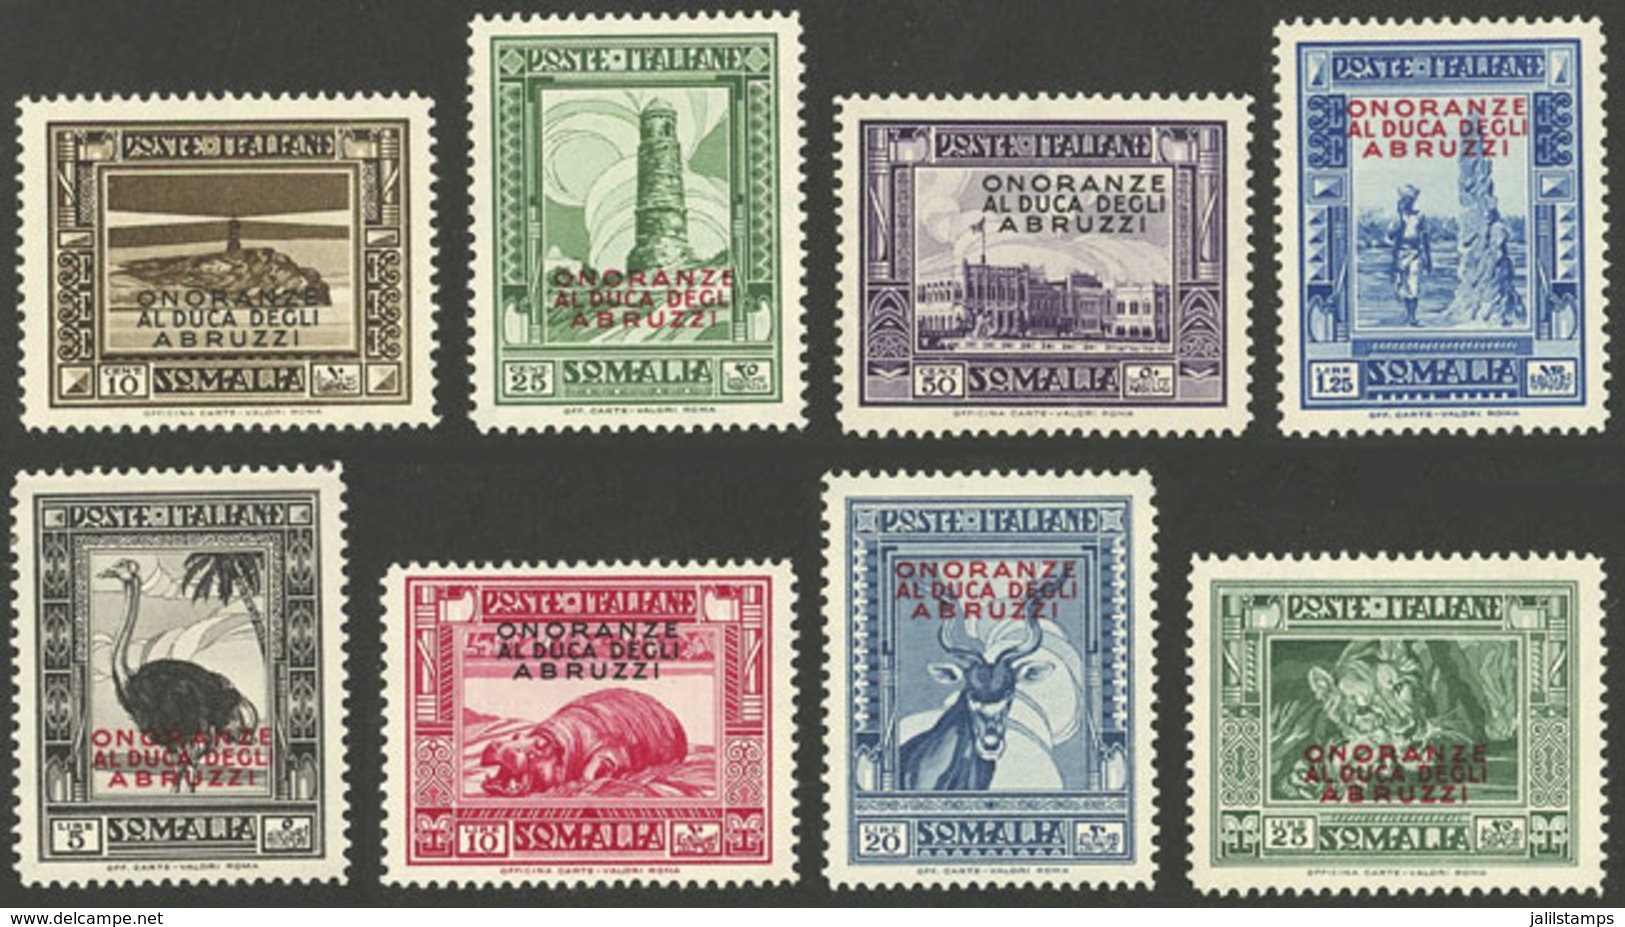 ITALIAN SOMALILAND: Sc.156/163, 1934 Abruzzi Issue, Cmpl. Set Of 8 Values, Mint Lightly Hinged, VF Quality! - Somalie